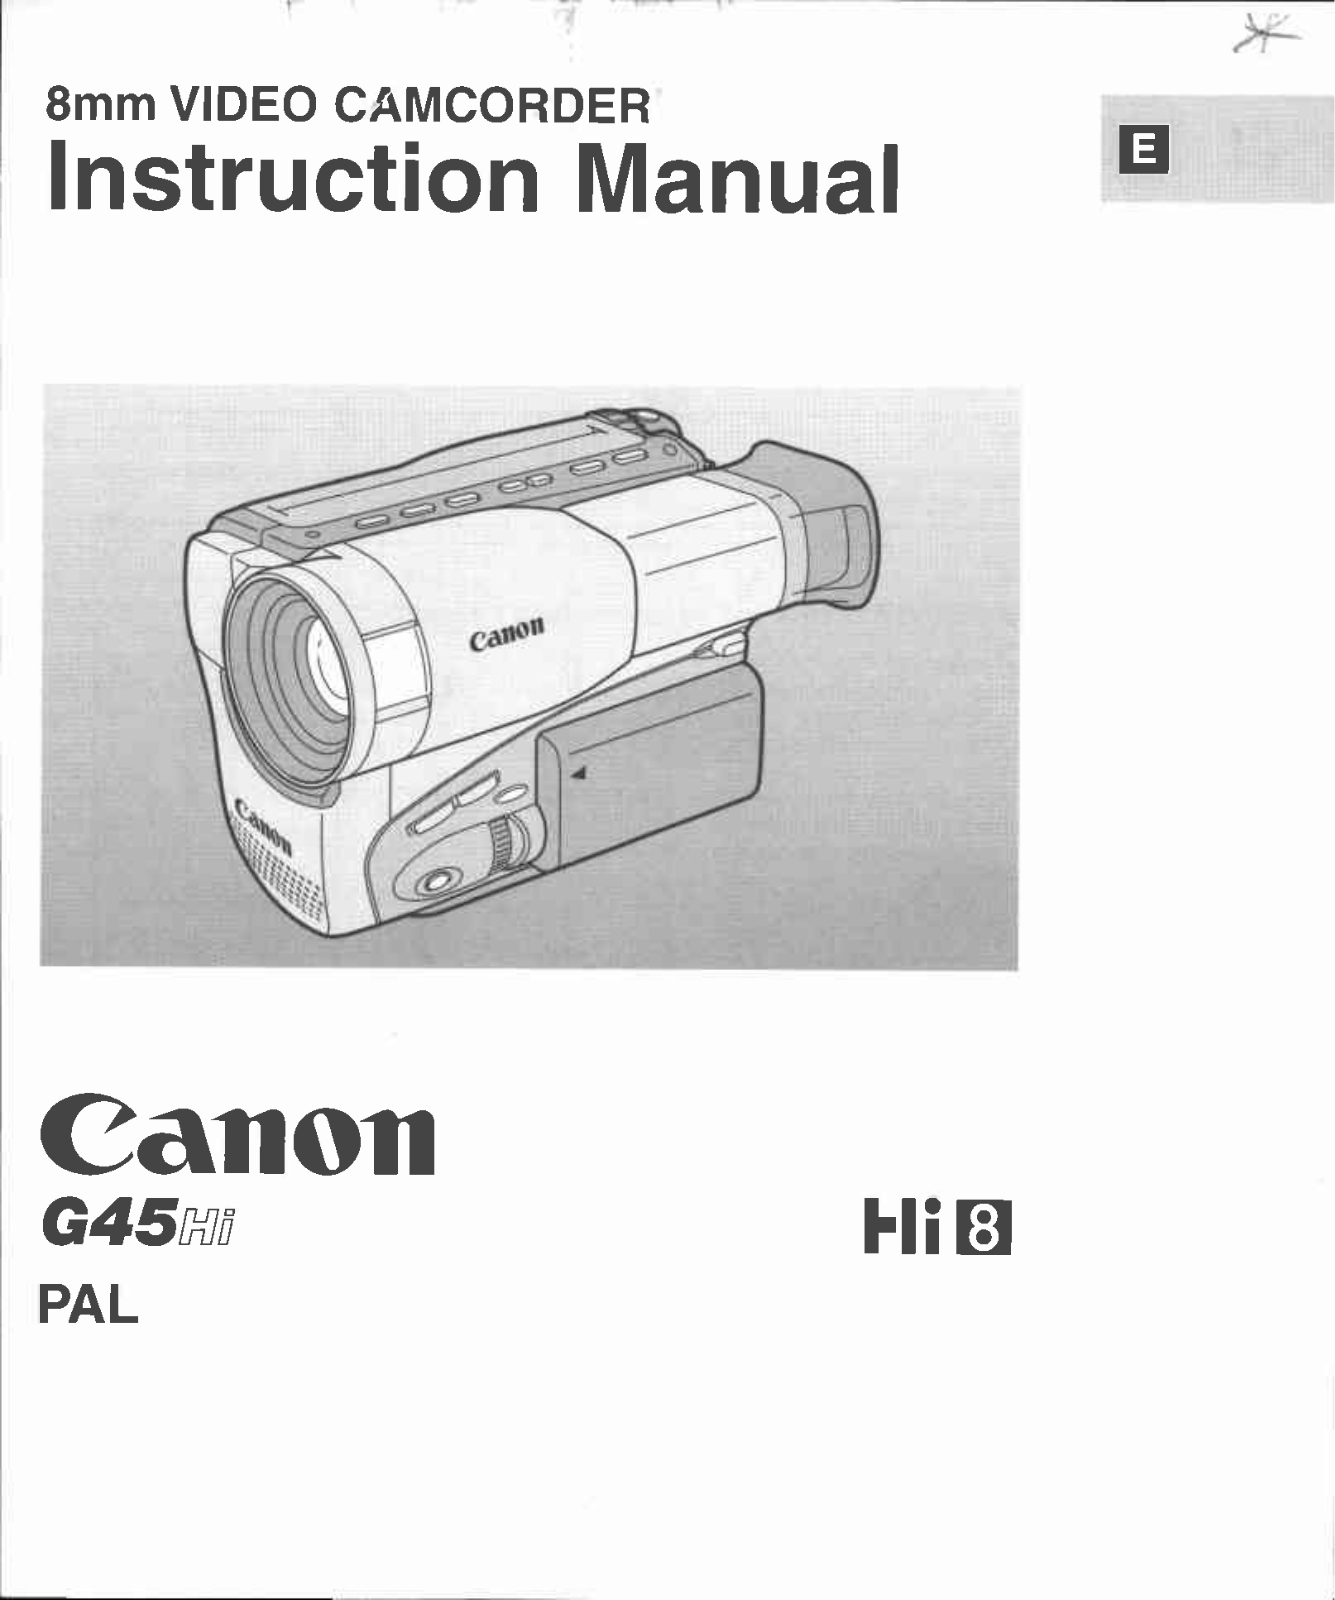 Canon G 45 Hi User Manual